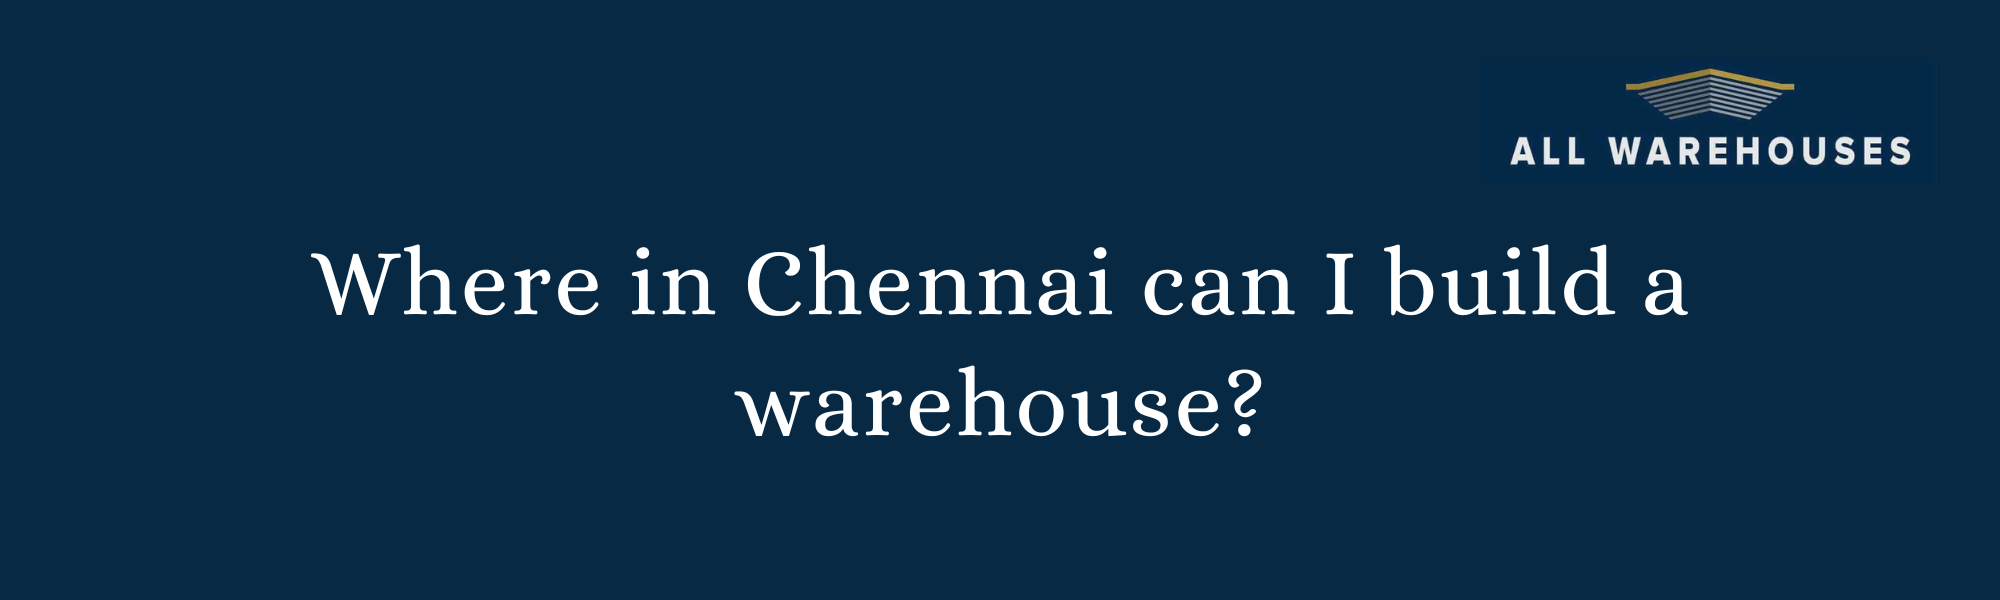 Where in Chennai can I build a warehouse?